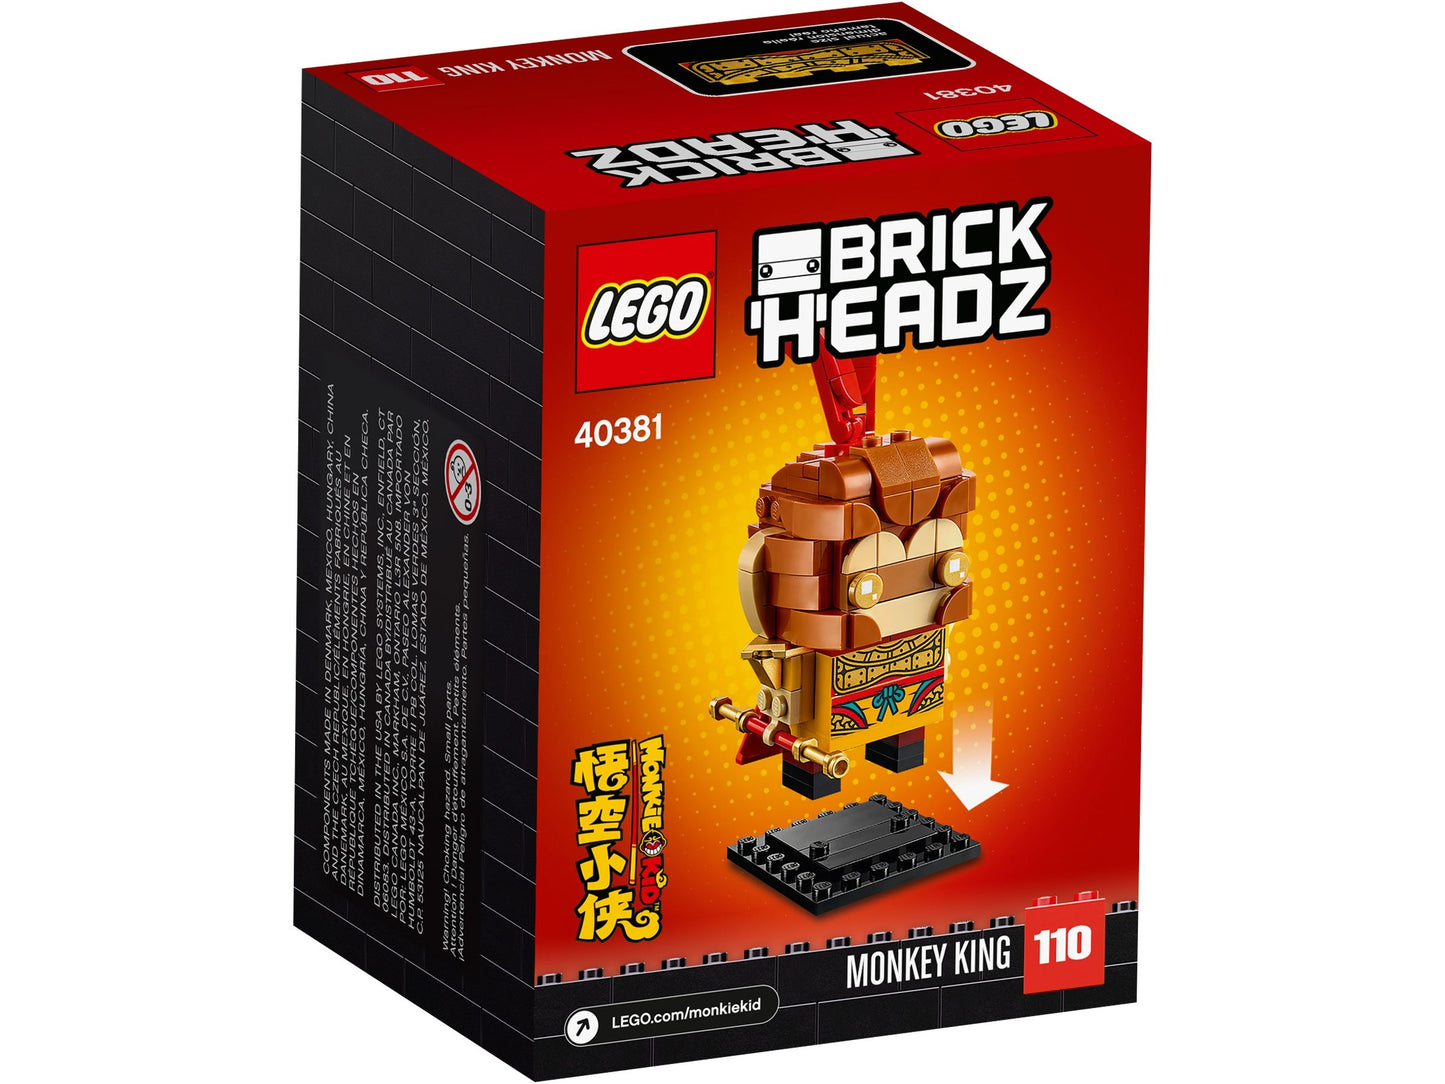 BrickHeadz 40381 Monkey King